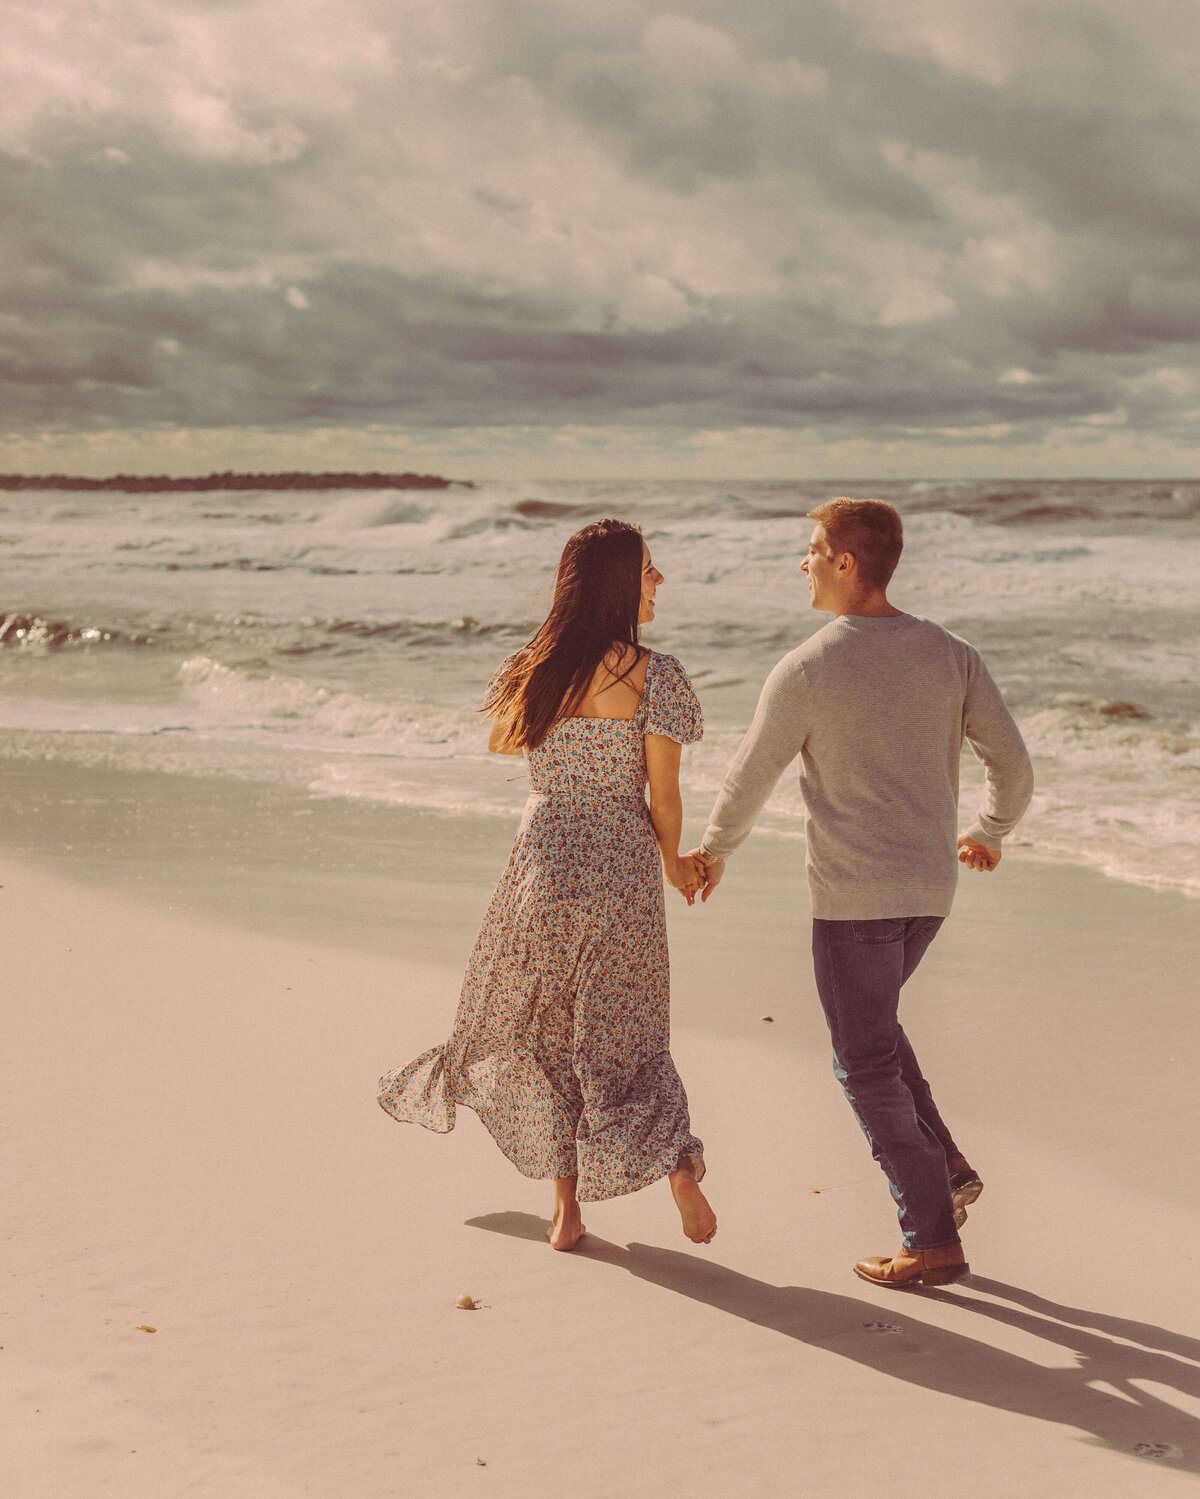 newly engaged ben & ashley run down panama city beach holding hands